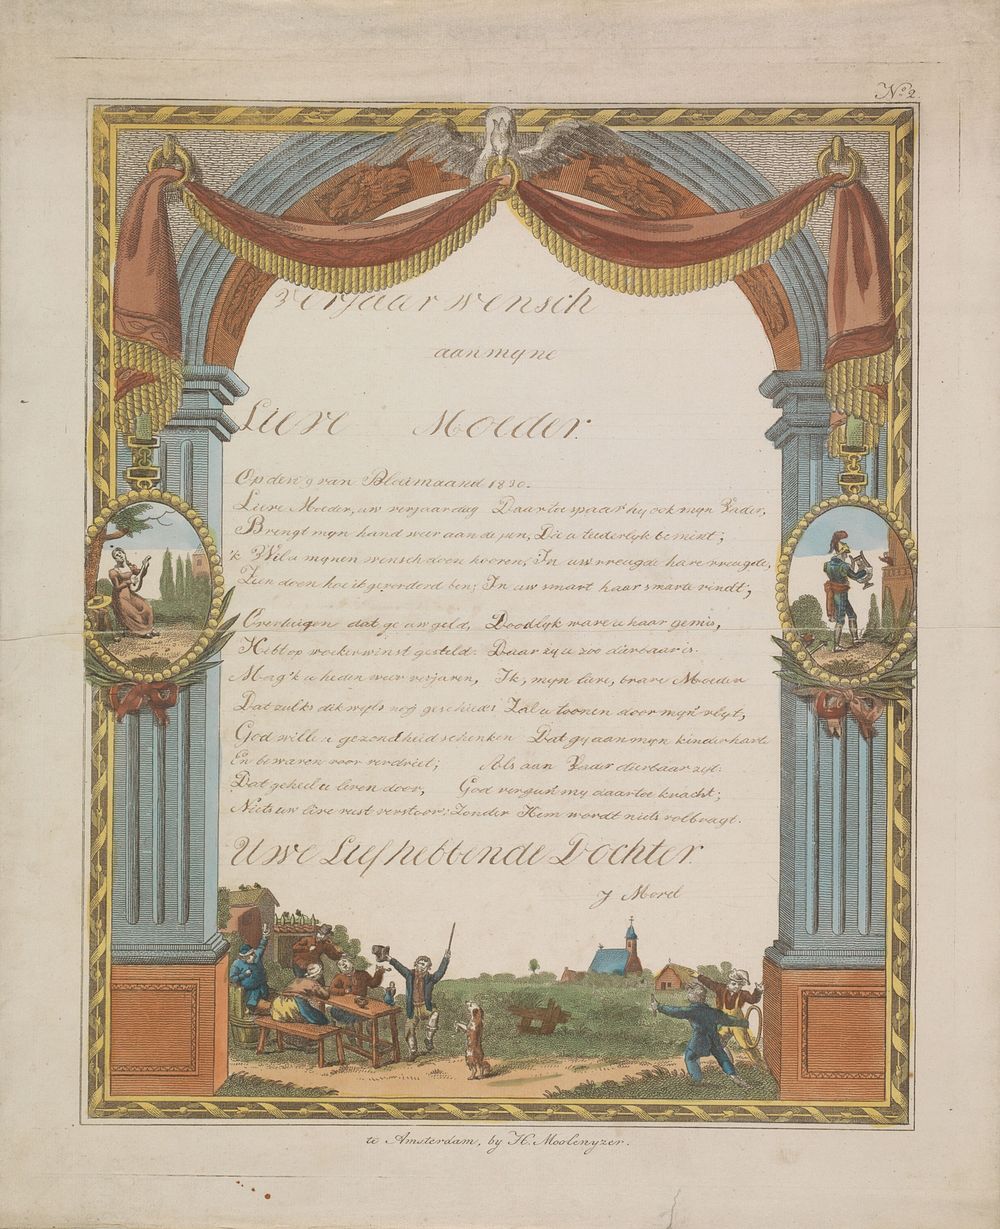 Wensbrief met drinkende boeren (1830) by Hendrik Moolenyzer and anonymous